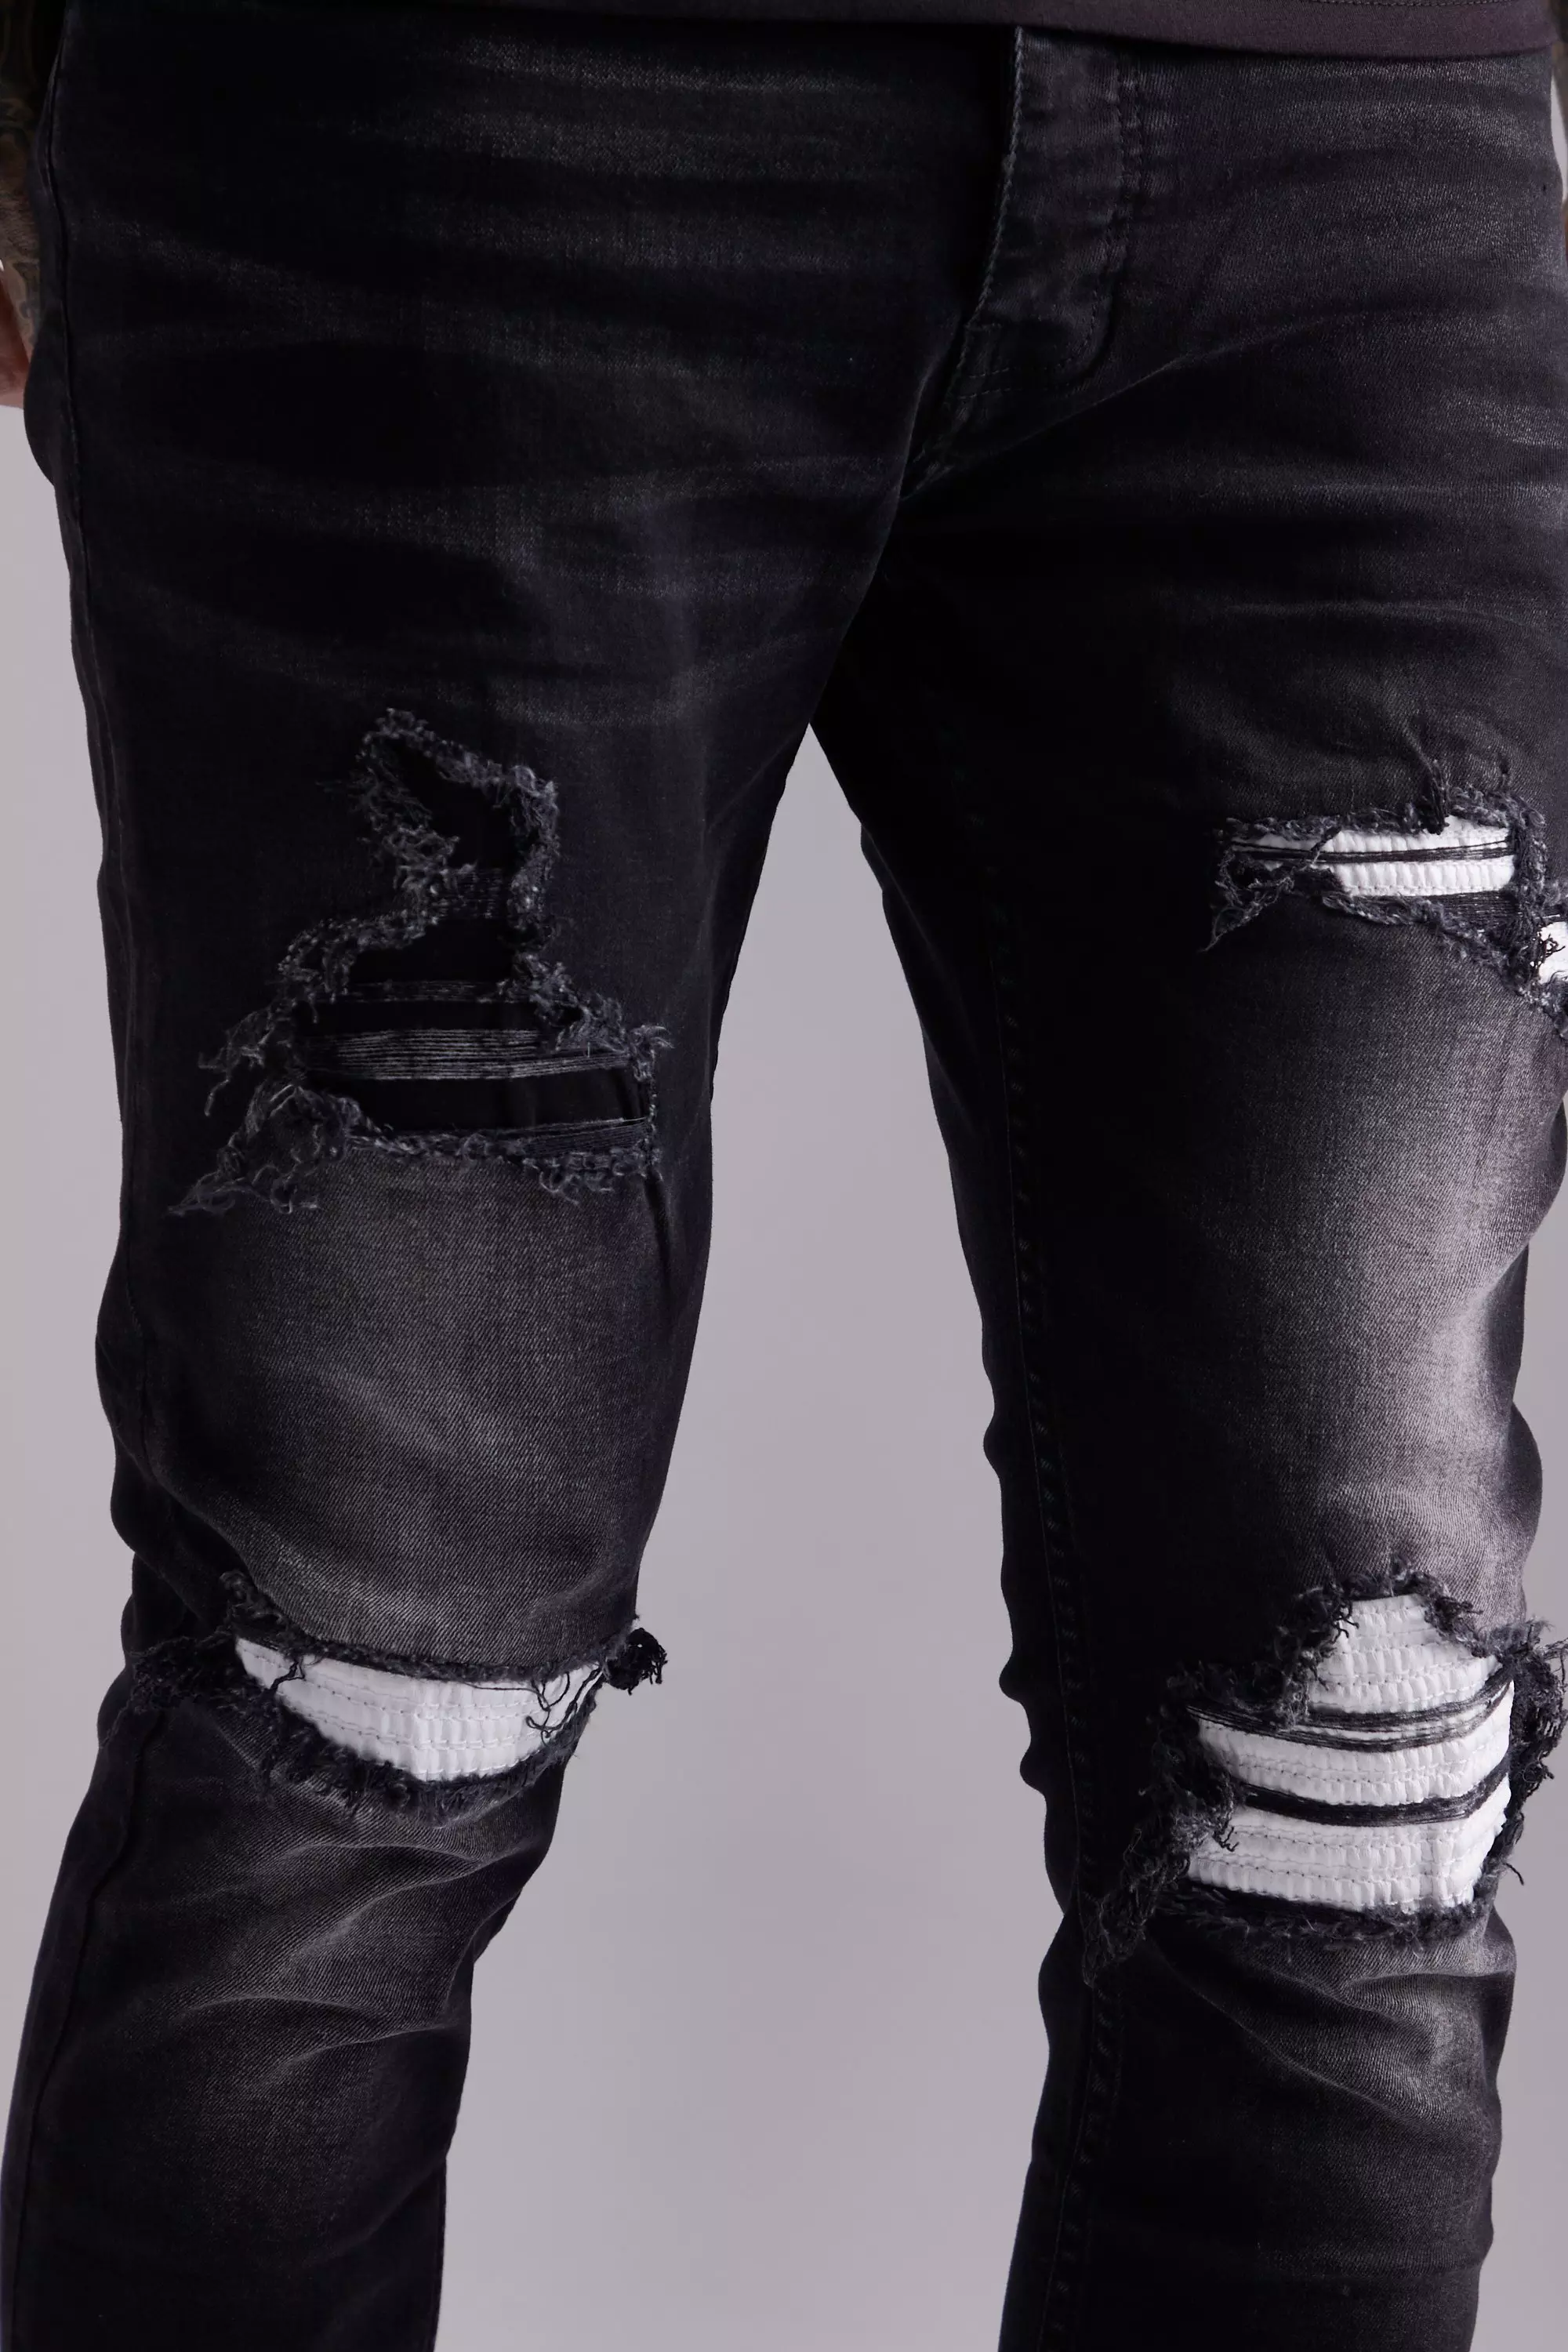 Amiri Men's Paint Drop Logo Skinny Jeans